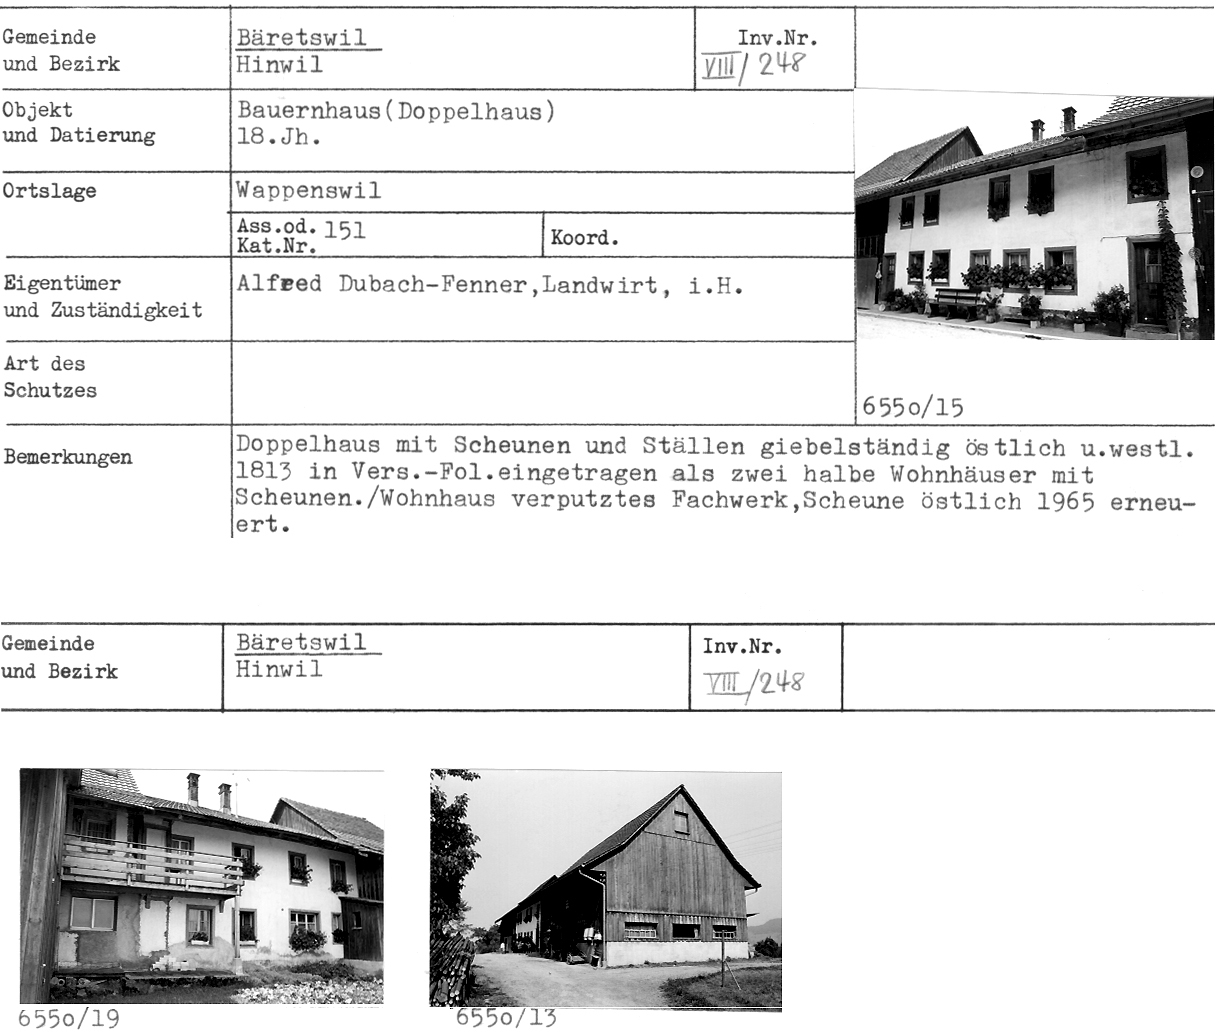 Bauernhaus (Doppelhaus), 18.Jh., Wappenswil